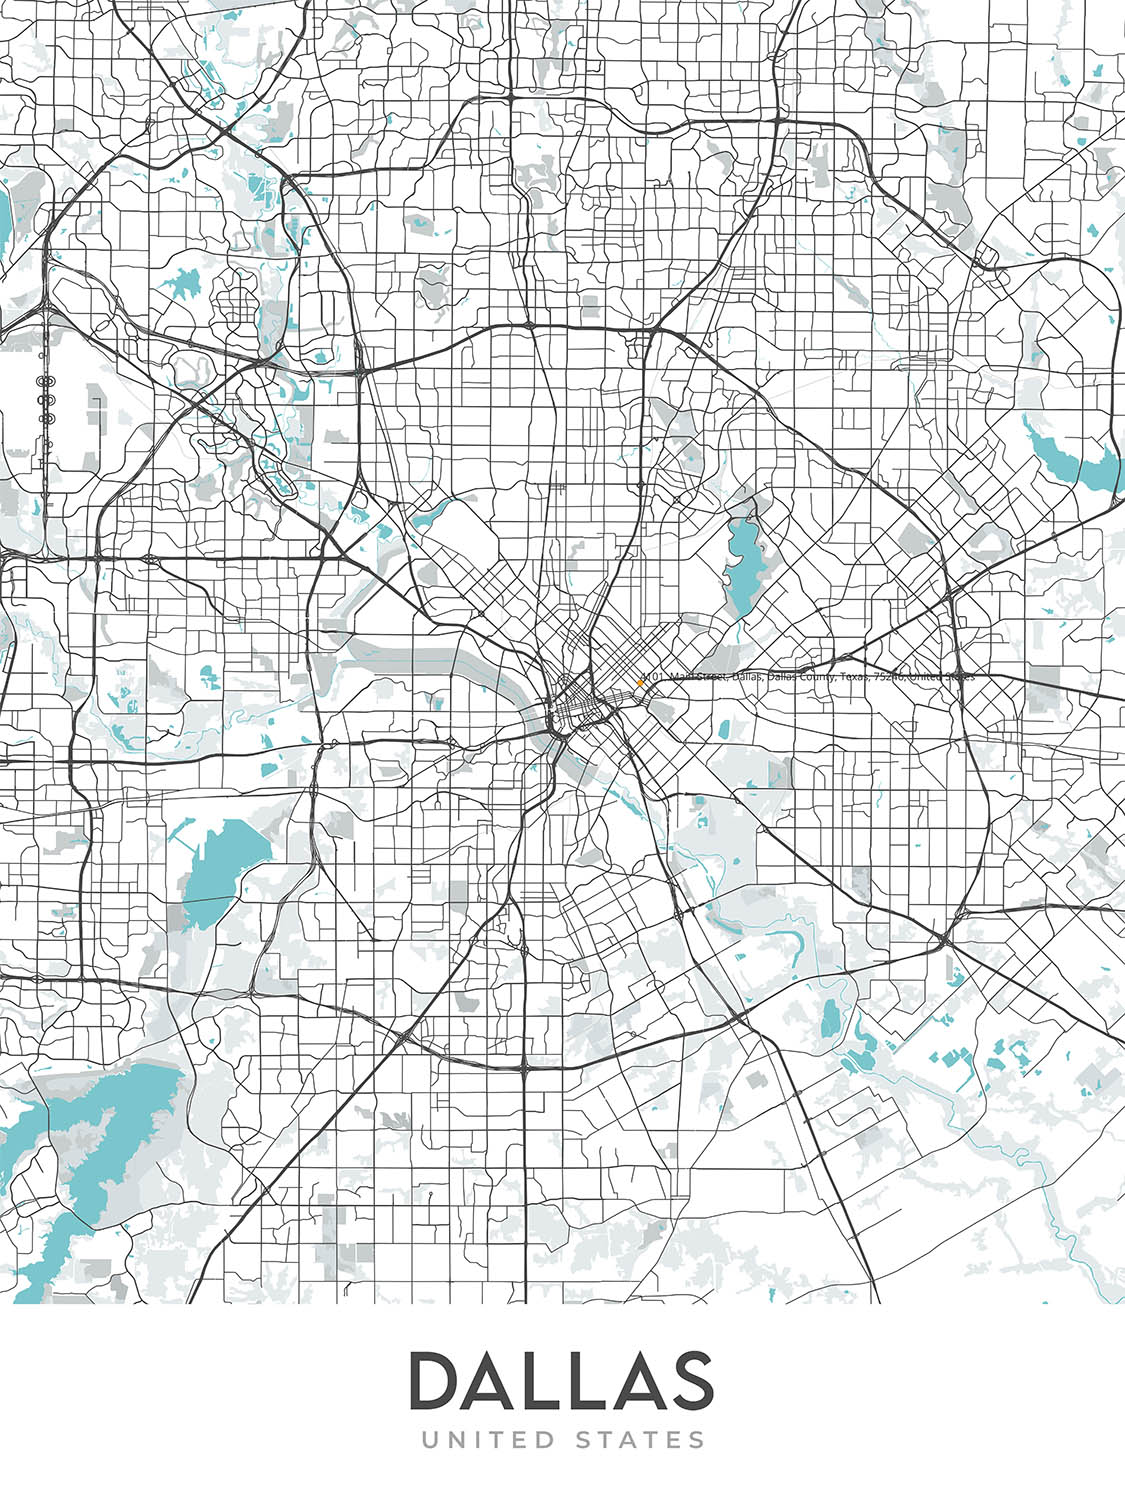 Modern City Map of Dallas, TX: Uptown, Downtown, Deep Ellum, Dallas Cowboys Stadium, Dallas Arboretum